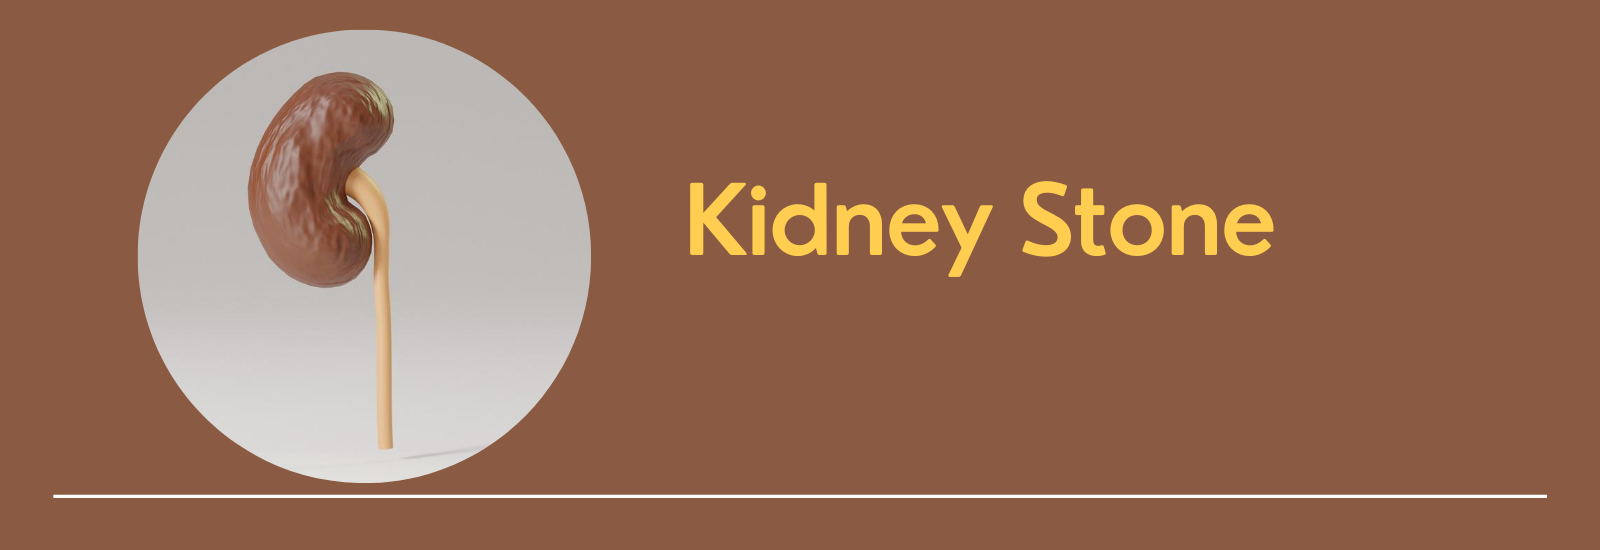 Kidney Stone – Types, Causes, Symptoms, Prevention, & Treatment